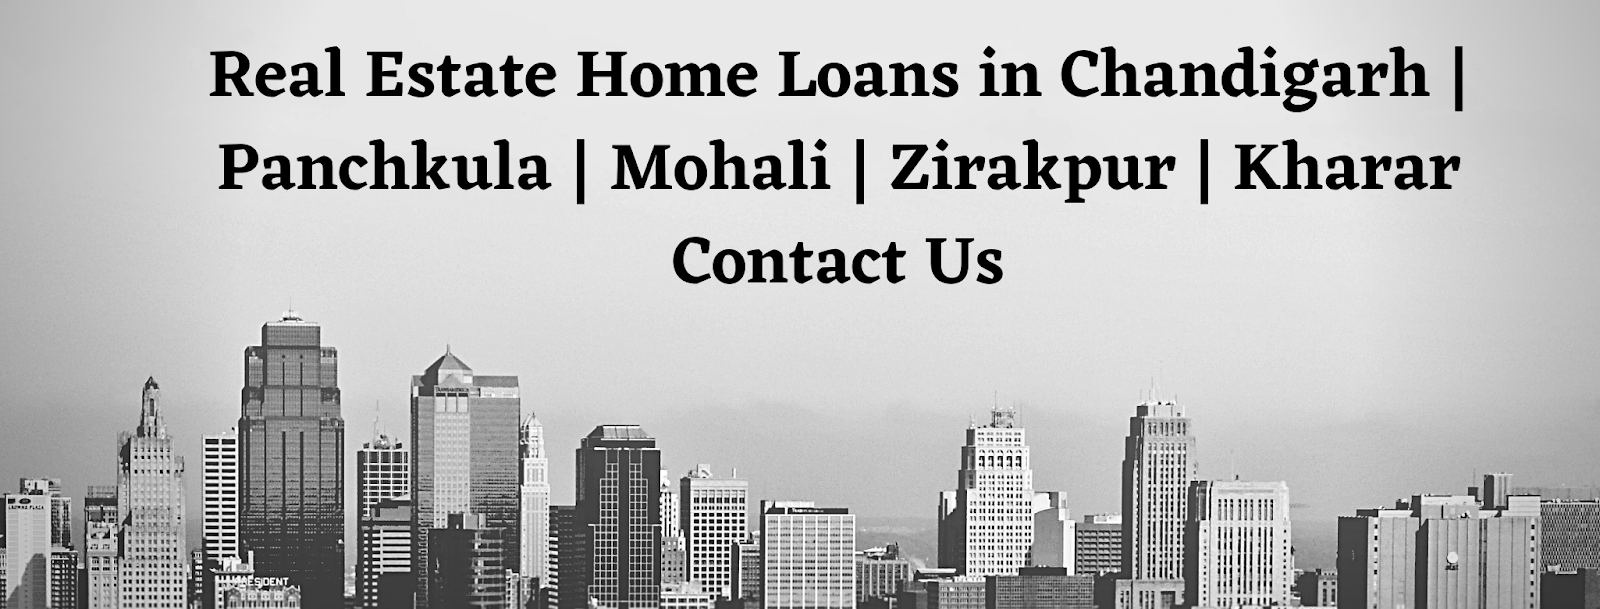 Real Estate Home Loans Insurance Chandigarh Panchkula Mohali Zirakpur Kharar | Flats | Plots | Loan 